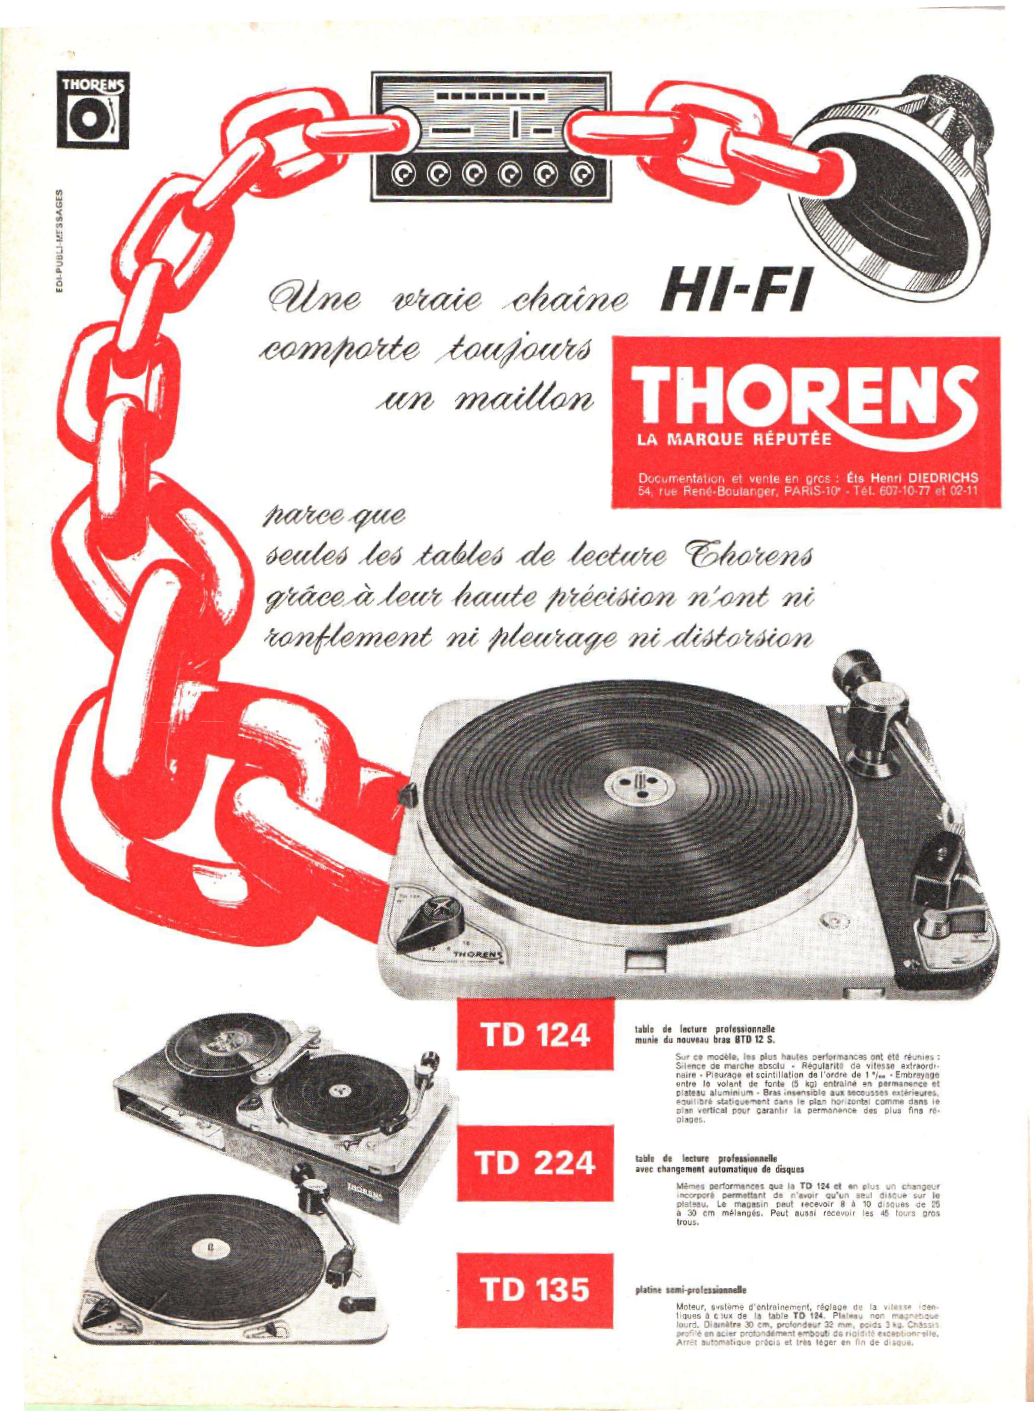 Thorens_HP_1965.PNG